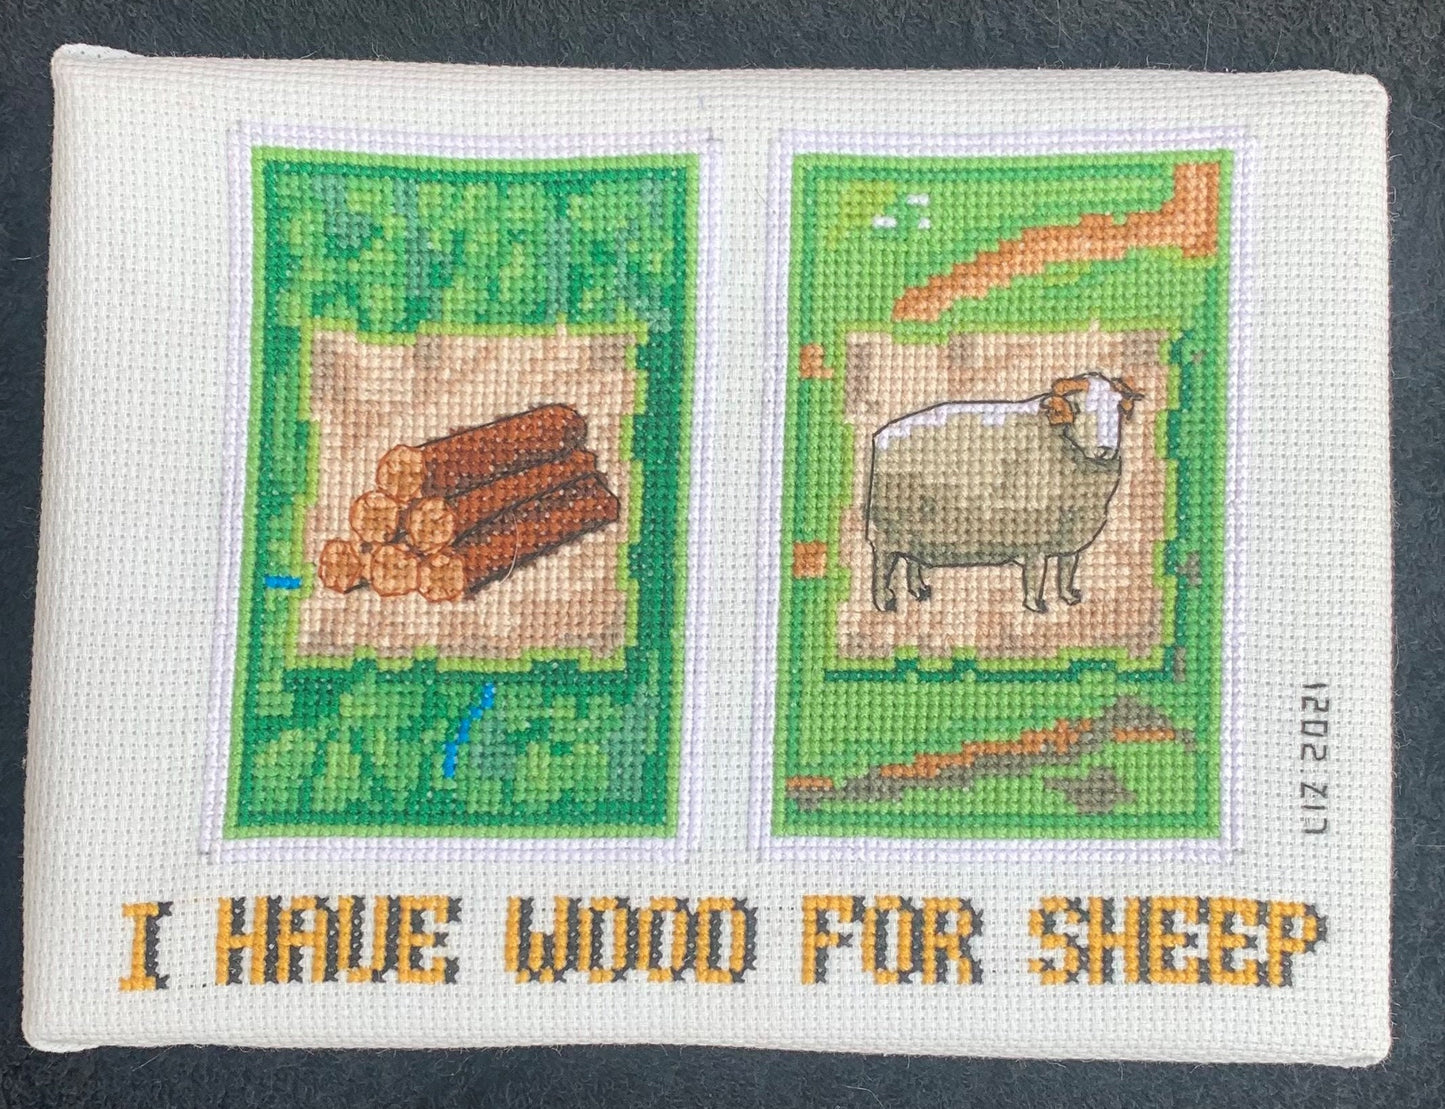 Board Game inspired (Catan Parody) cross stitch pattern: "I have wood for sheep" PDF cross stitch pattern